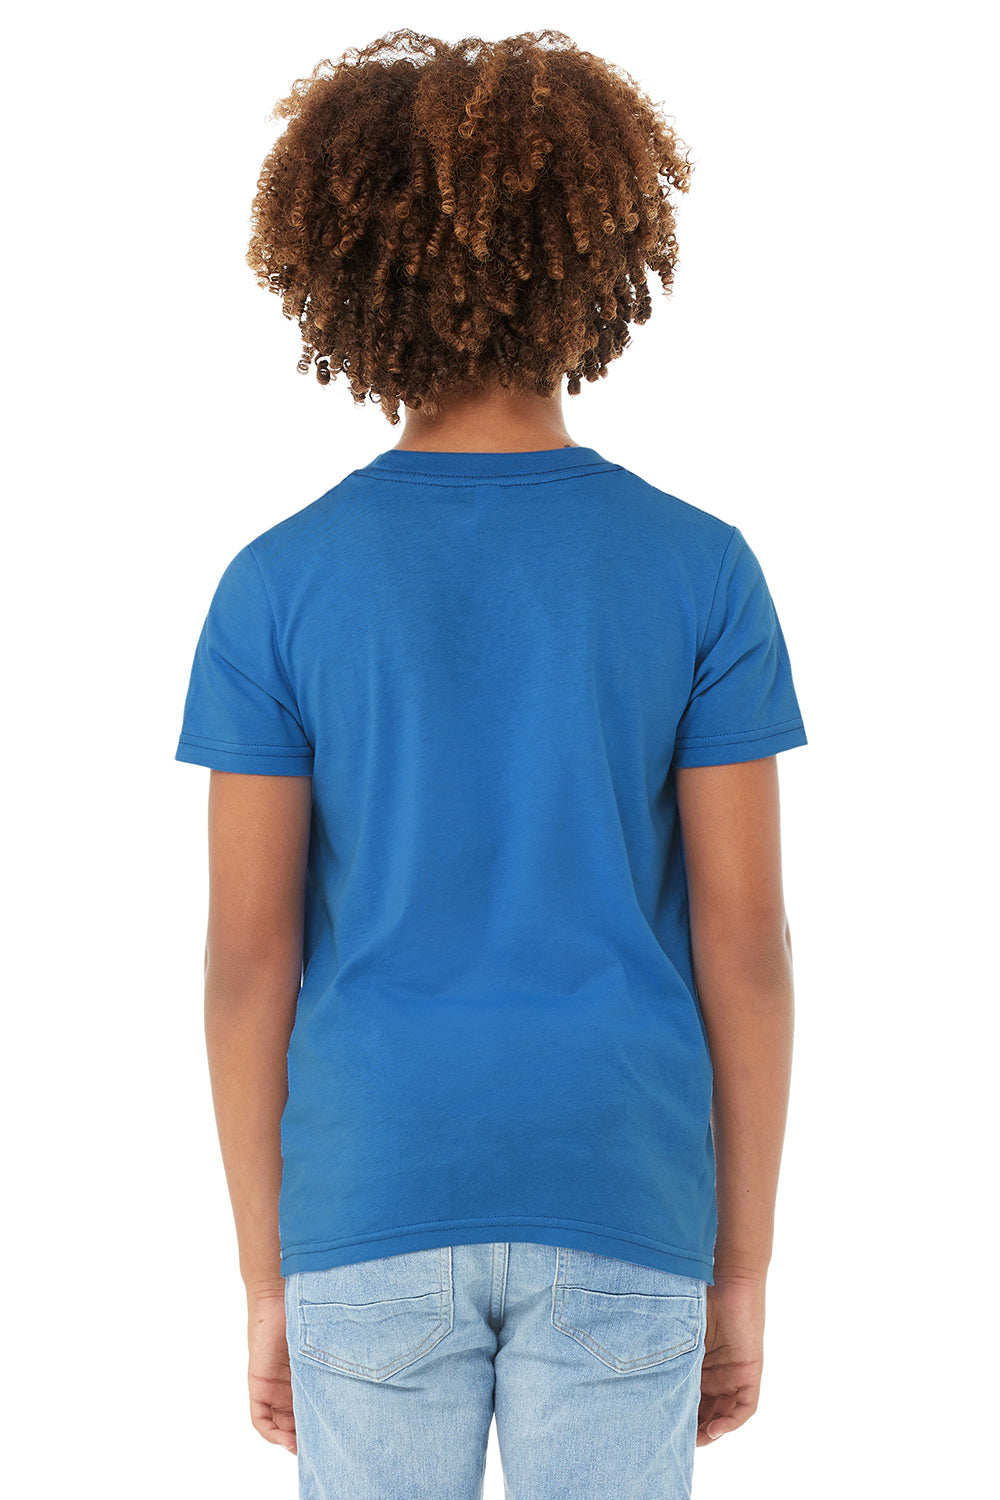 Bella + Canvas 3001Y Youth Jersey Short Sleeve Crewneck T-Shirt Columbia Blue Model Back